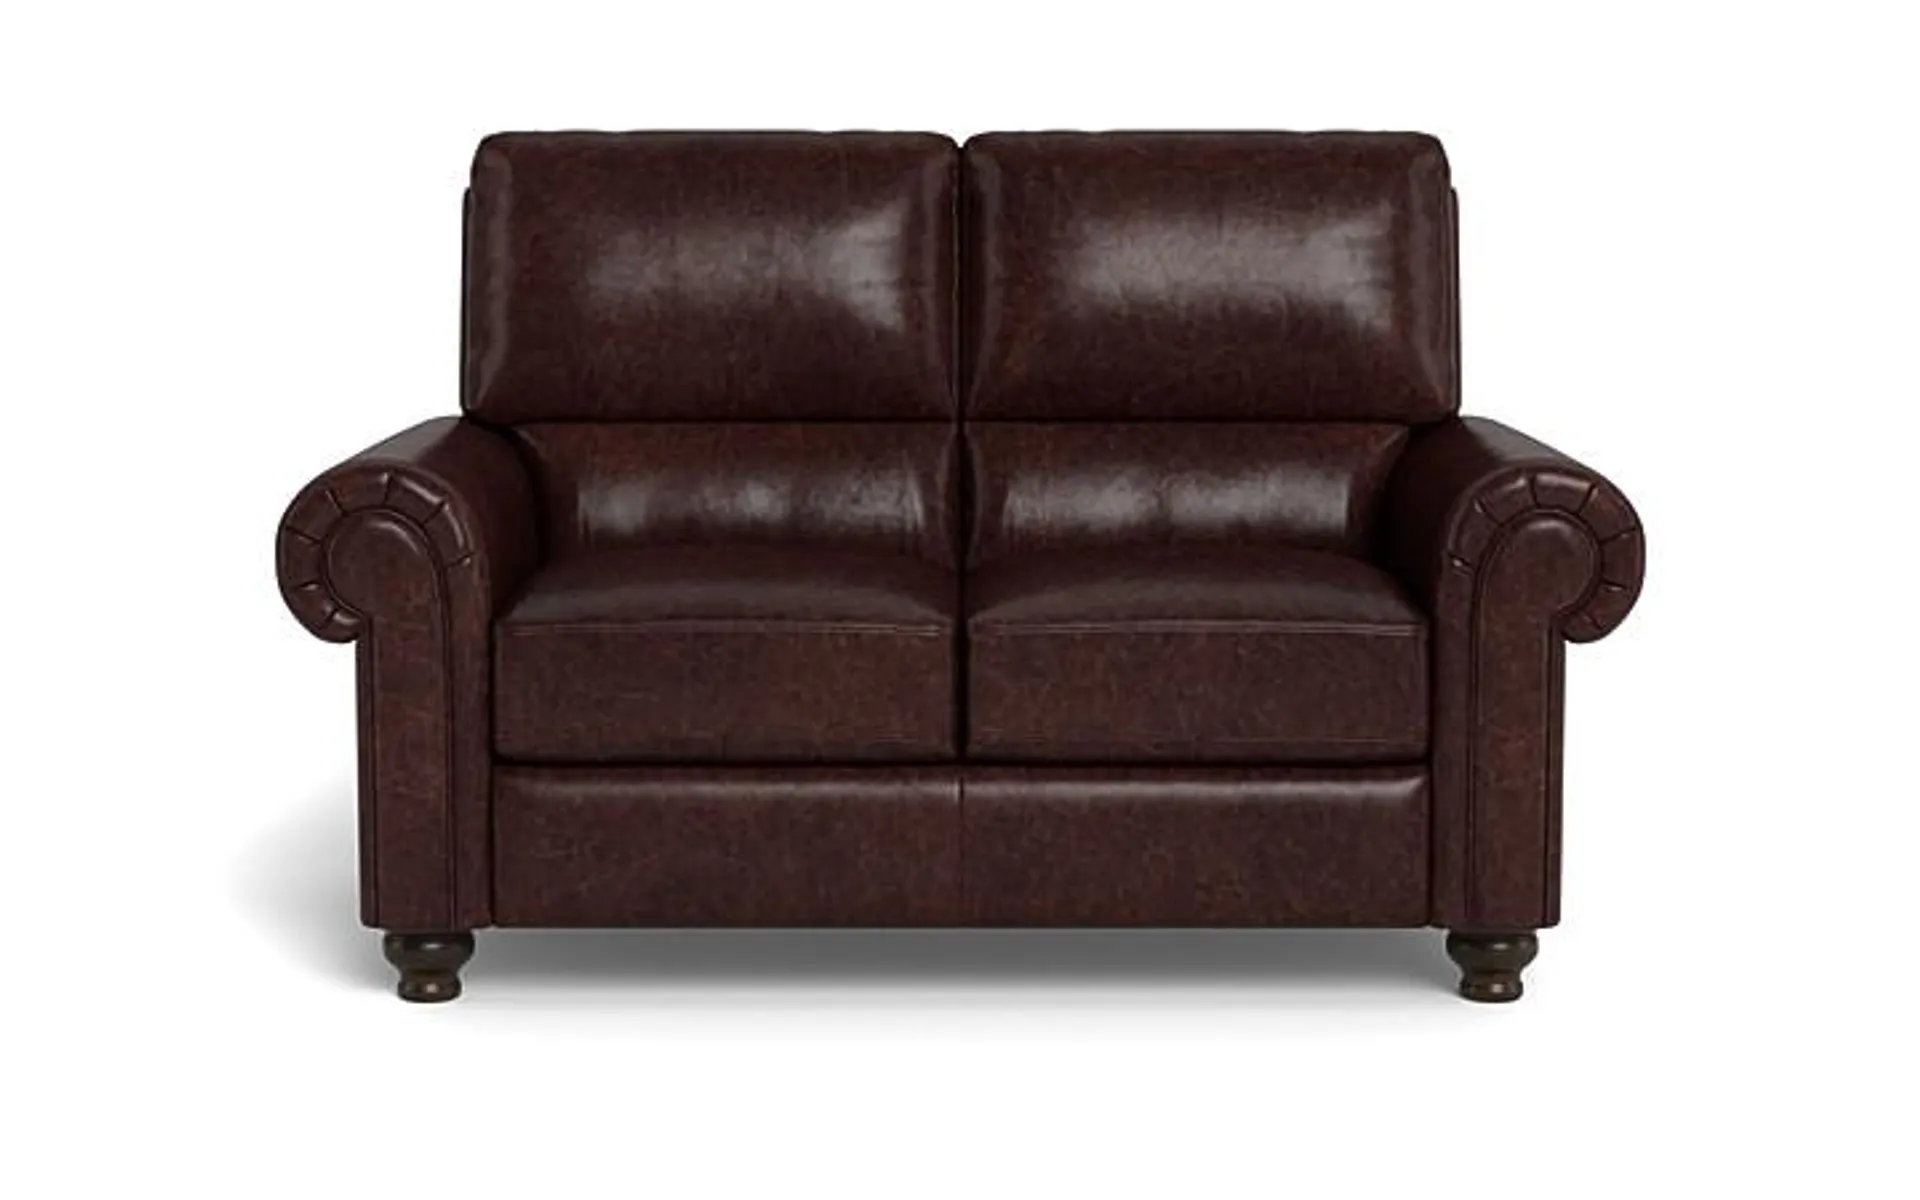 Fiordland 2.5 Seater Sofa in Leather